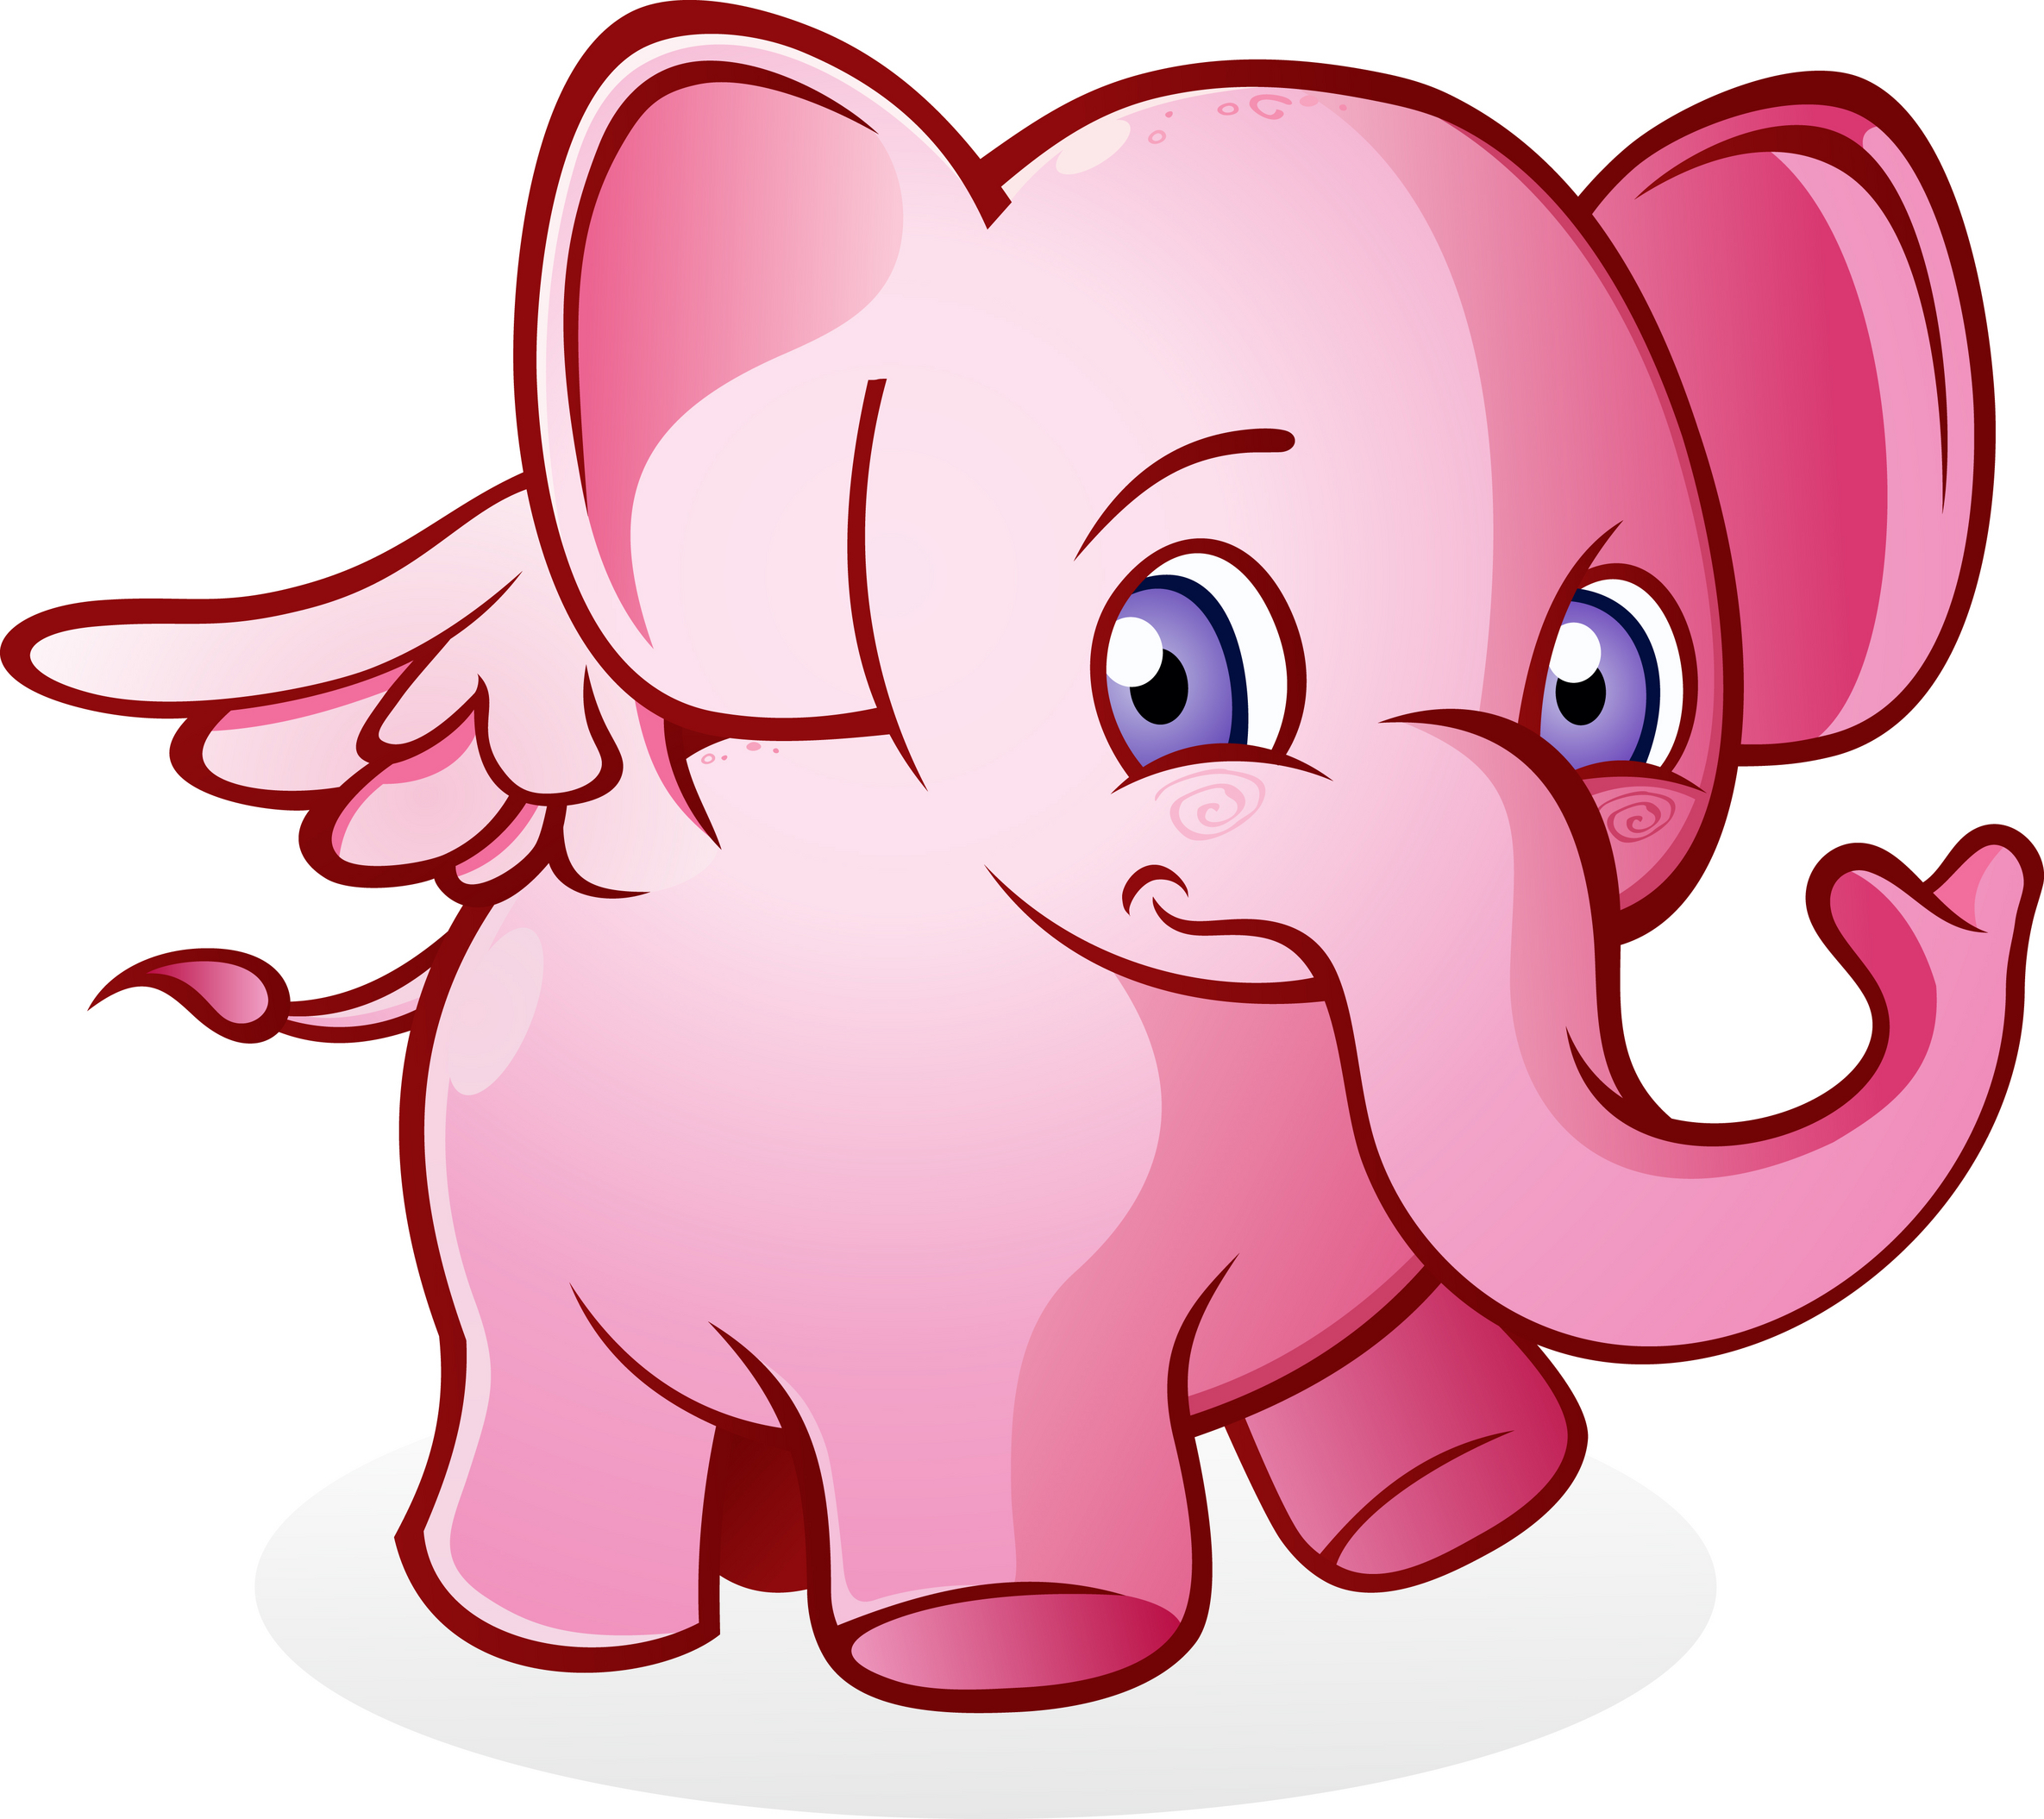 Pink elephants and trauma recovery | Trauma Recovery